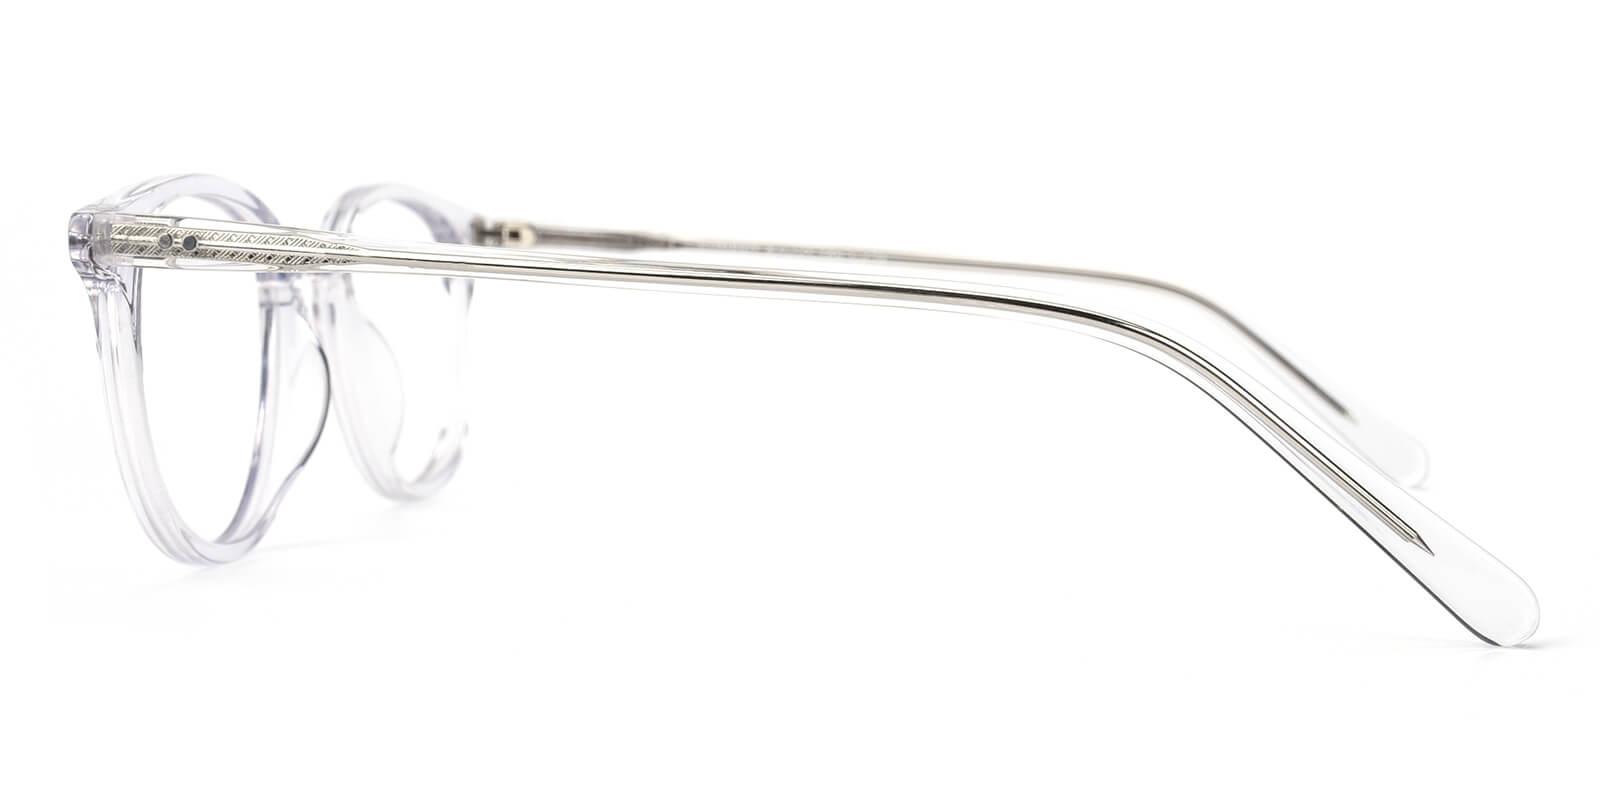 Trendiary-Translucent-Square / Round / Rectangle-Acetate-Eyeglasses-detail